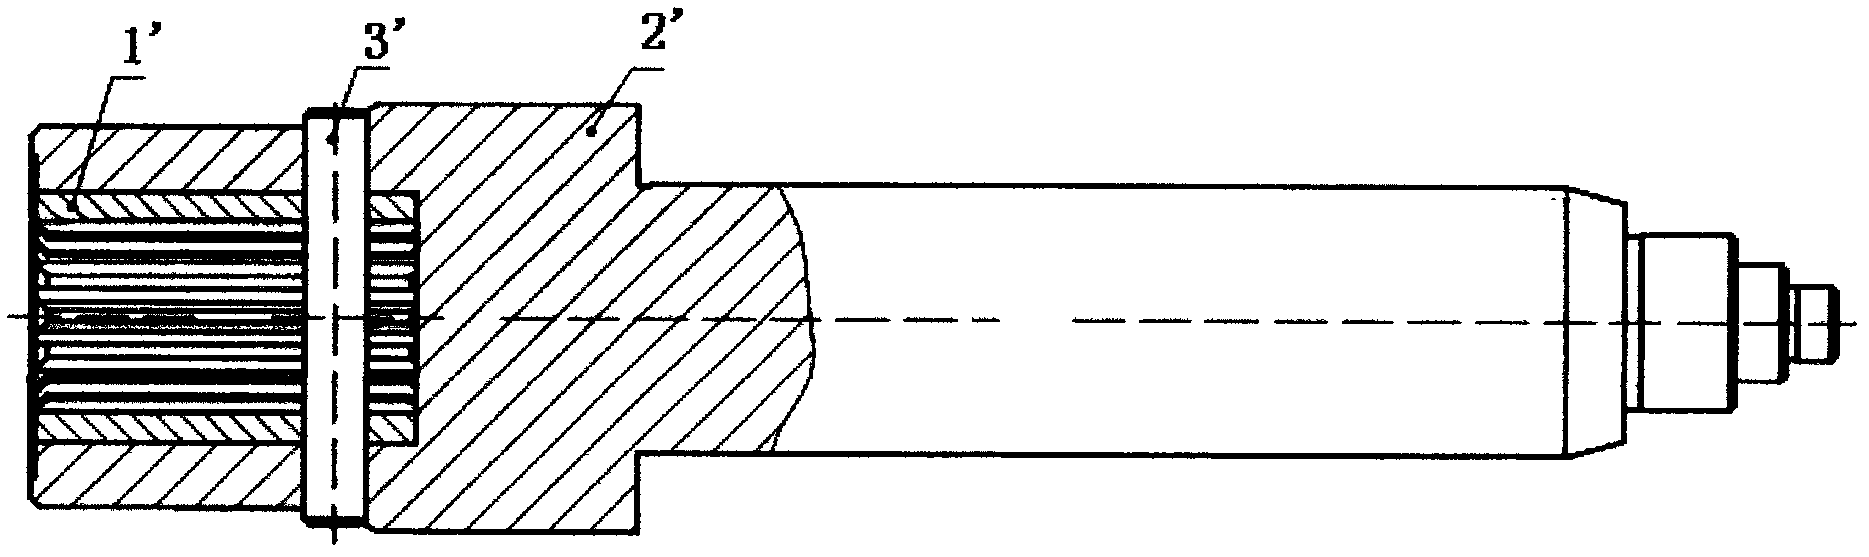 Internal spline shaft and preparation method thereof